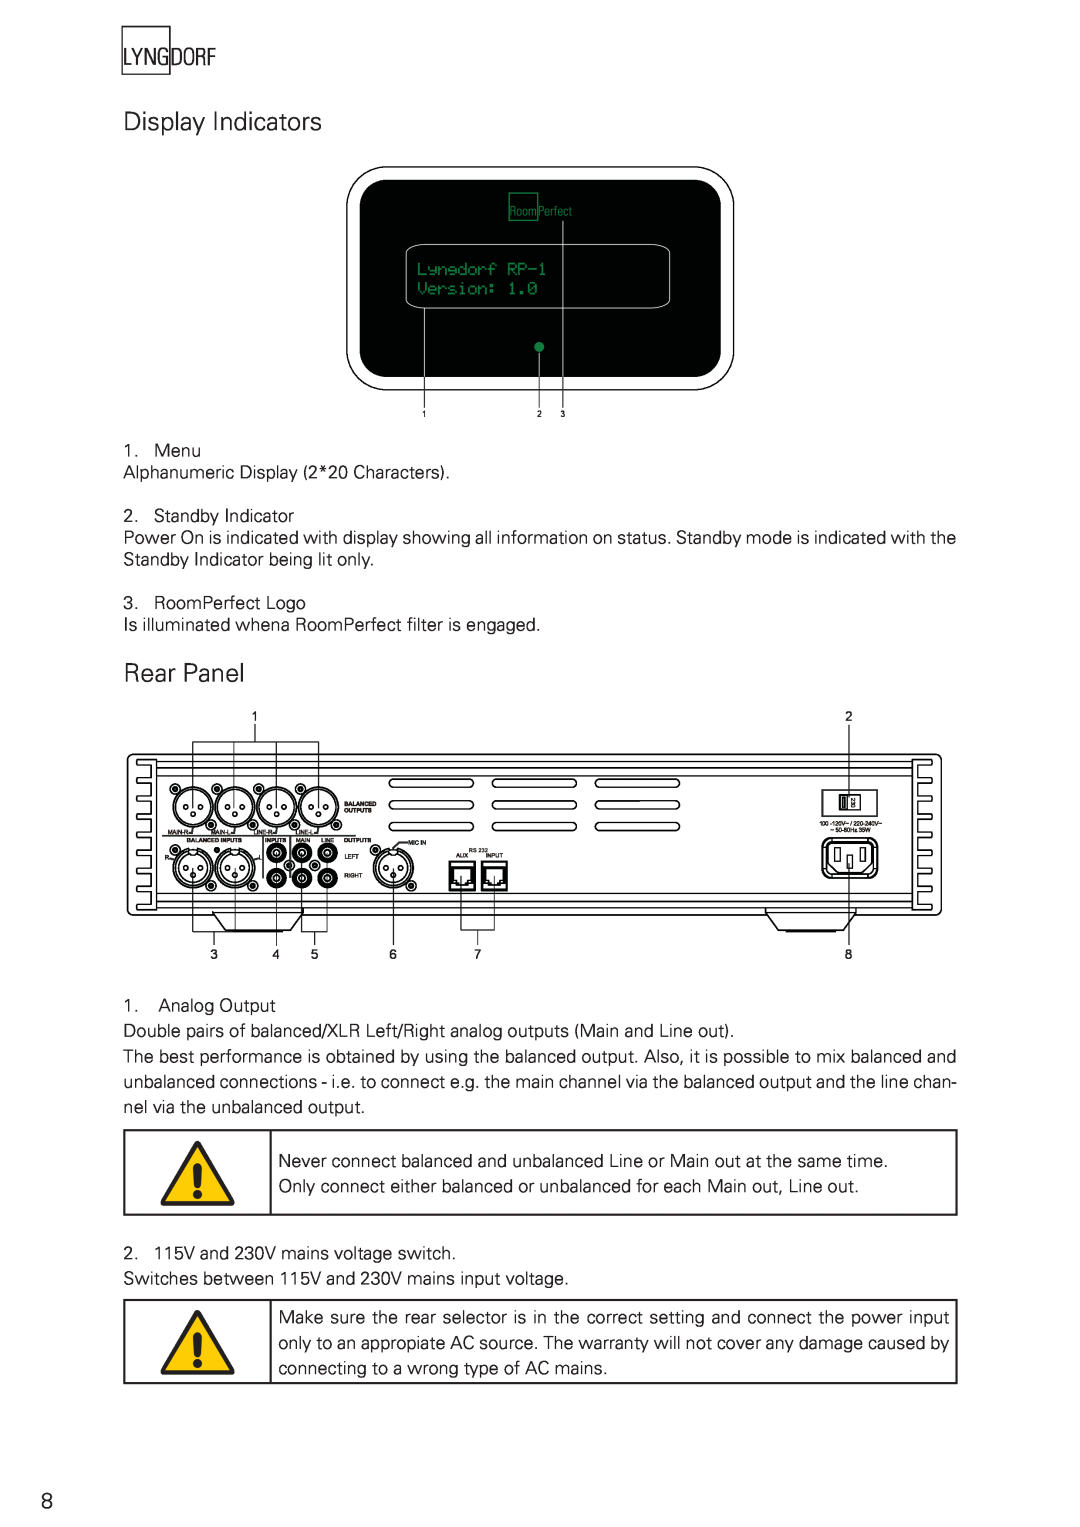 Lyngdorf Audio RP-1 owner manual Display Indicators, Rear Panel 